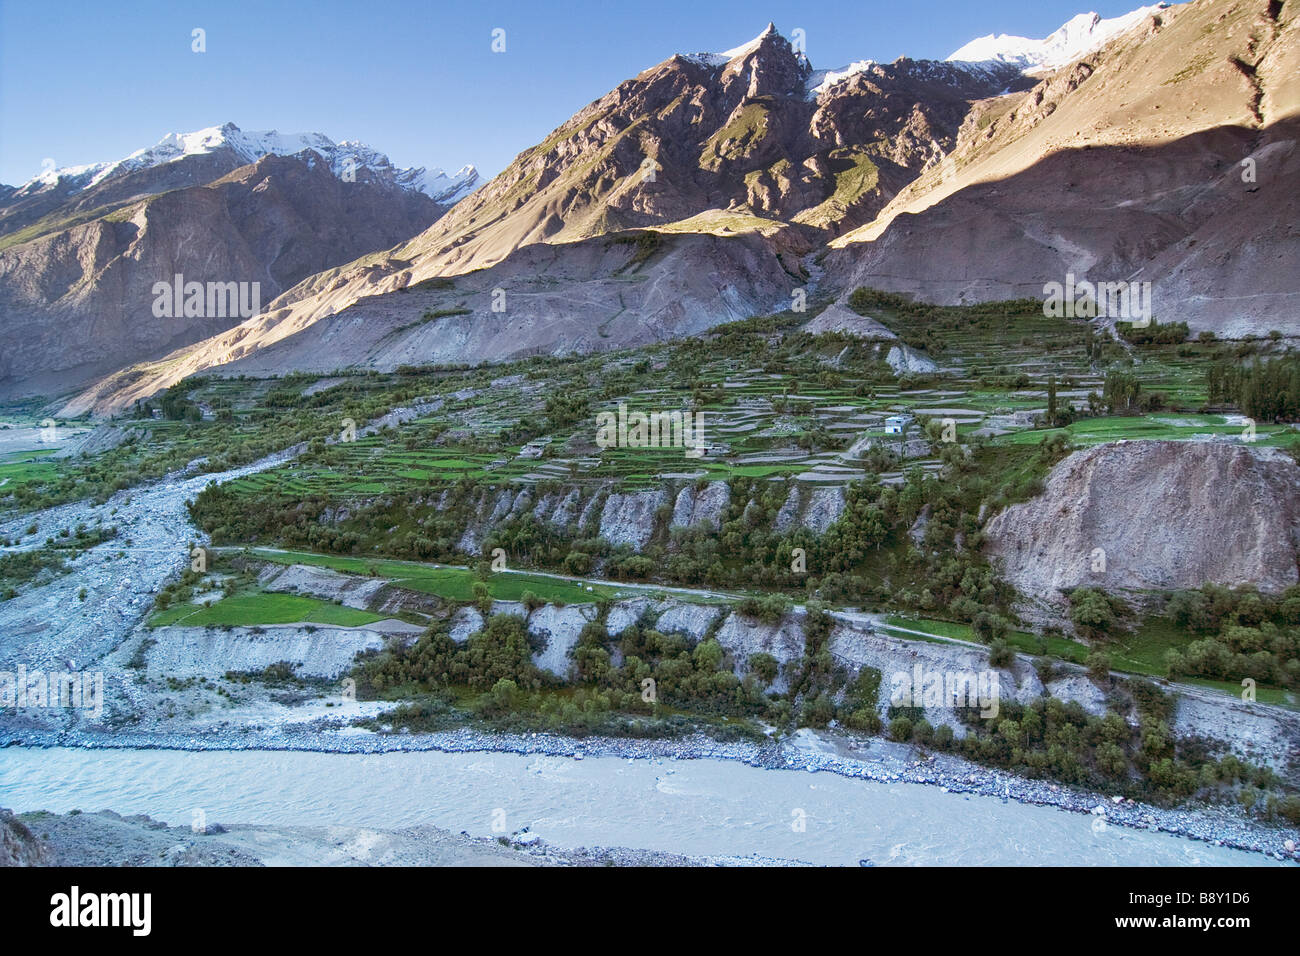 Terrace fields at the downside of a mountain range, Baltoro River, Karakoram Range, Baltistan, Pakistan Stock Photo